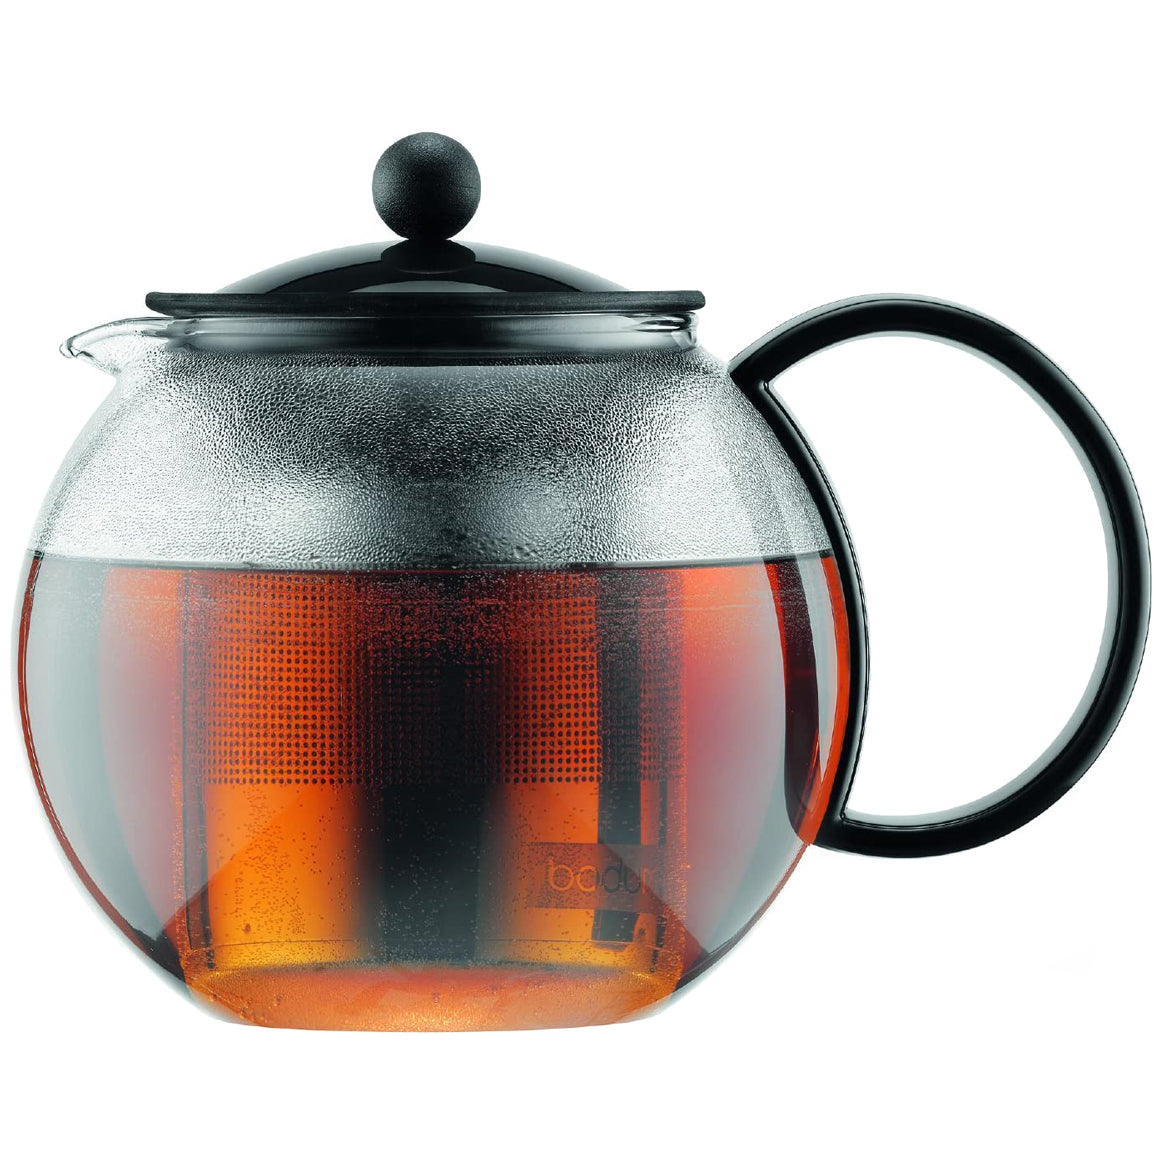 For Life, Infuser Tea Pot, 24 oz.